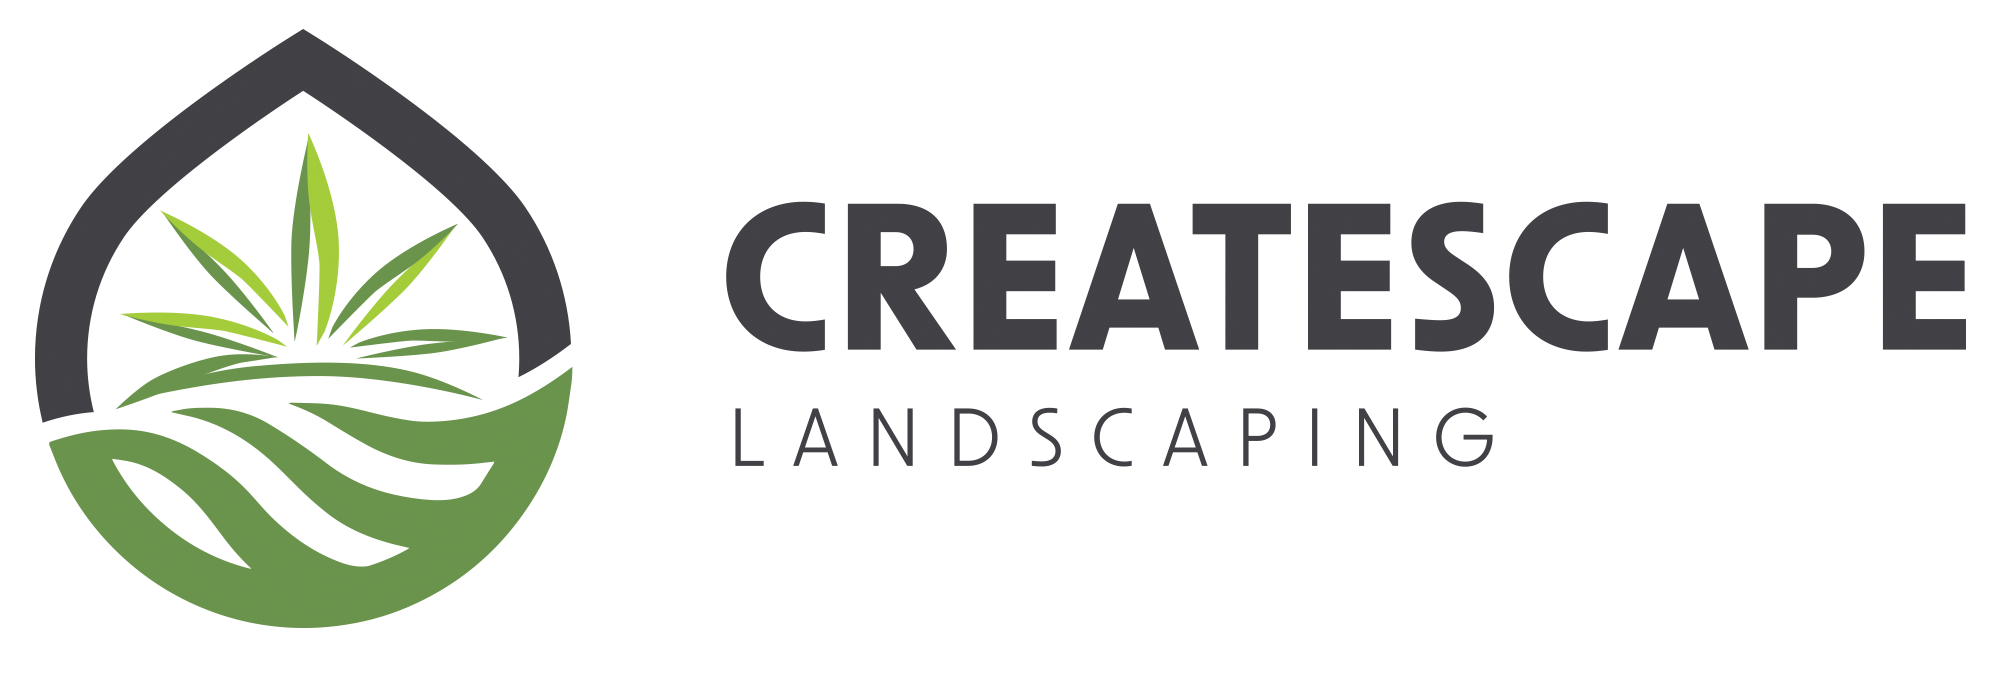 Createscape Landscaping